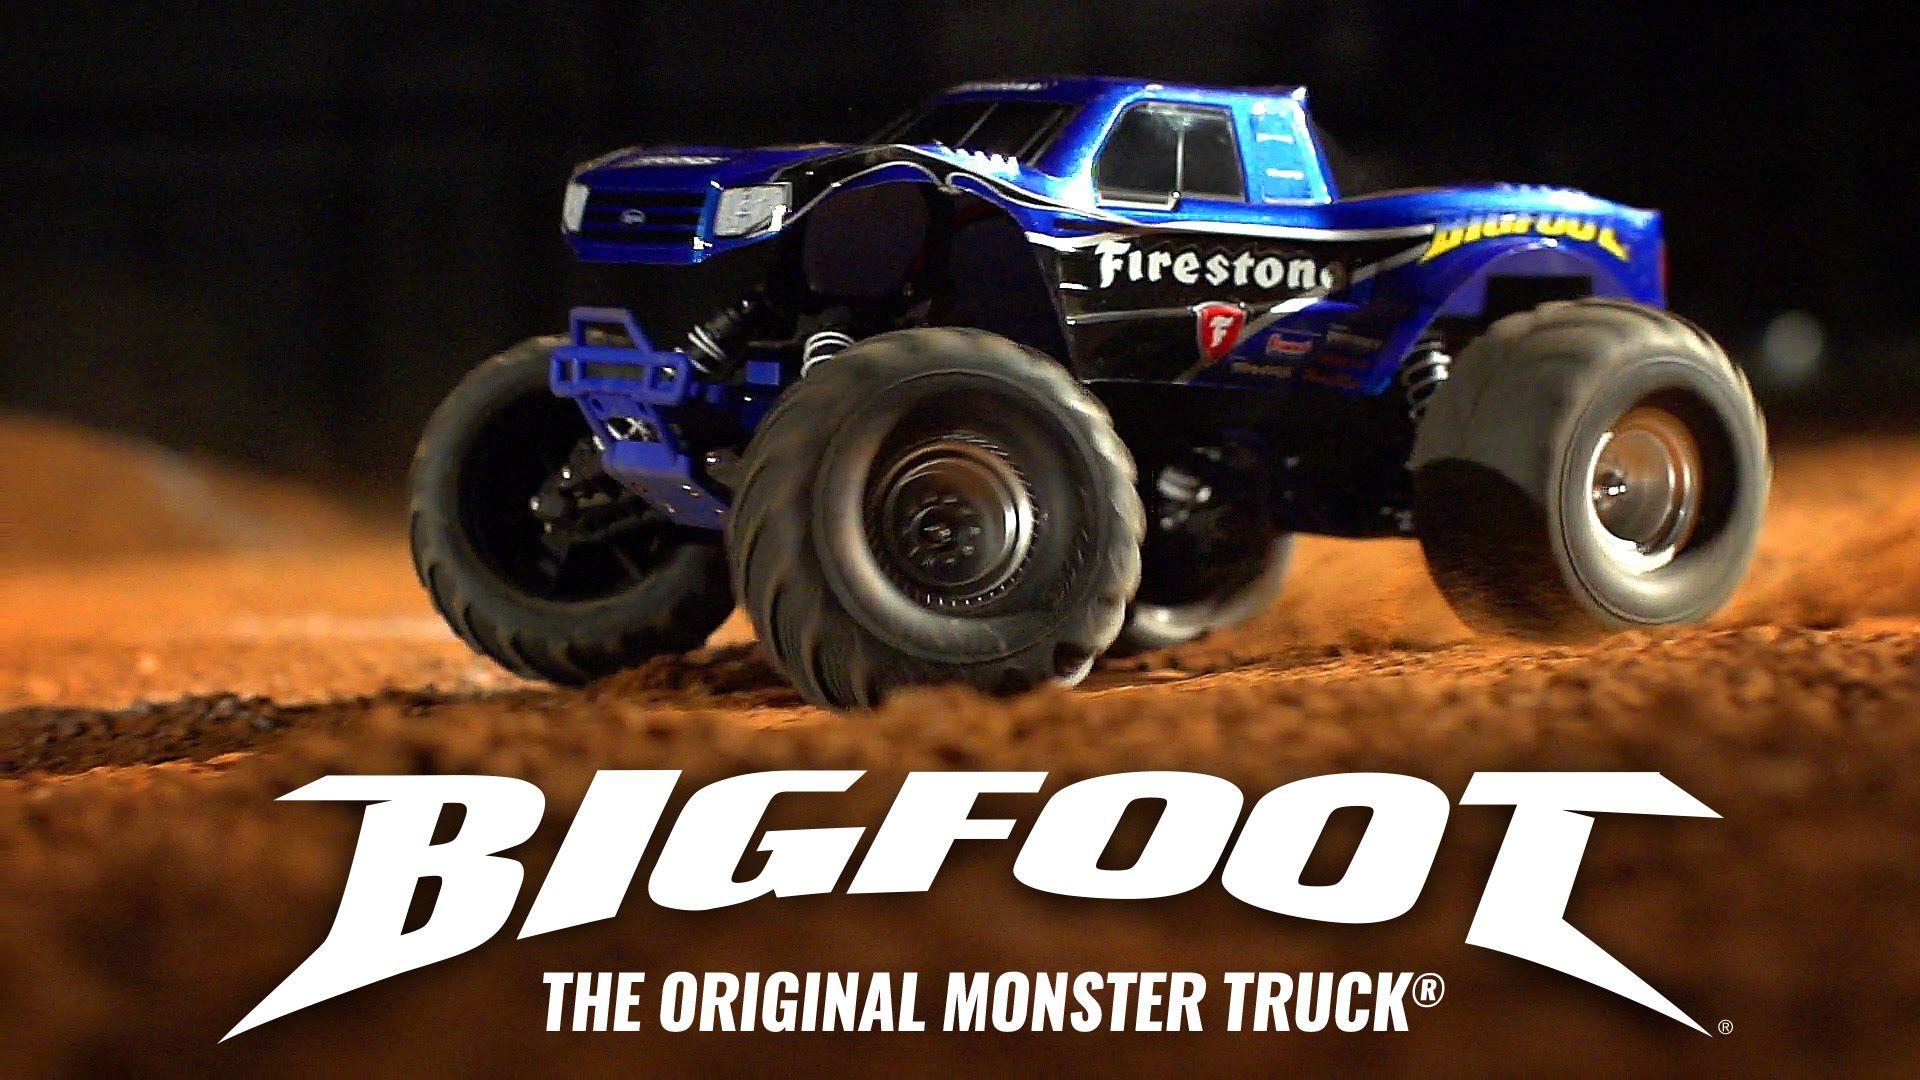 The Original Monster Truck